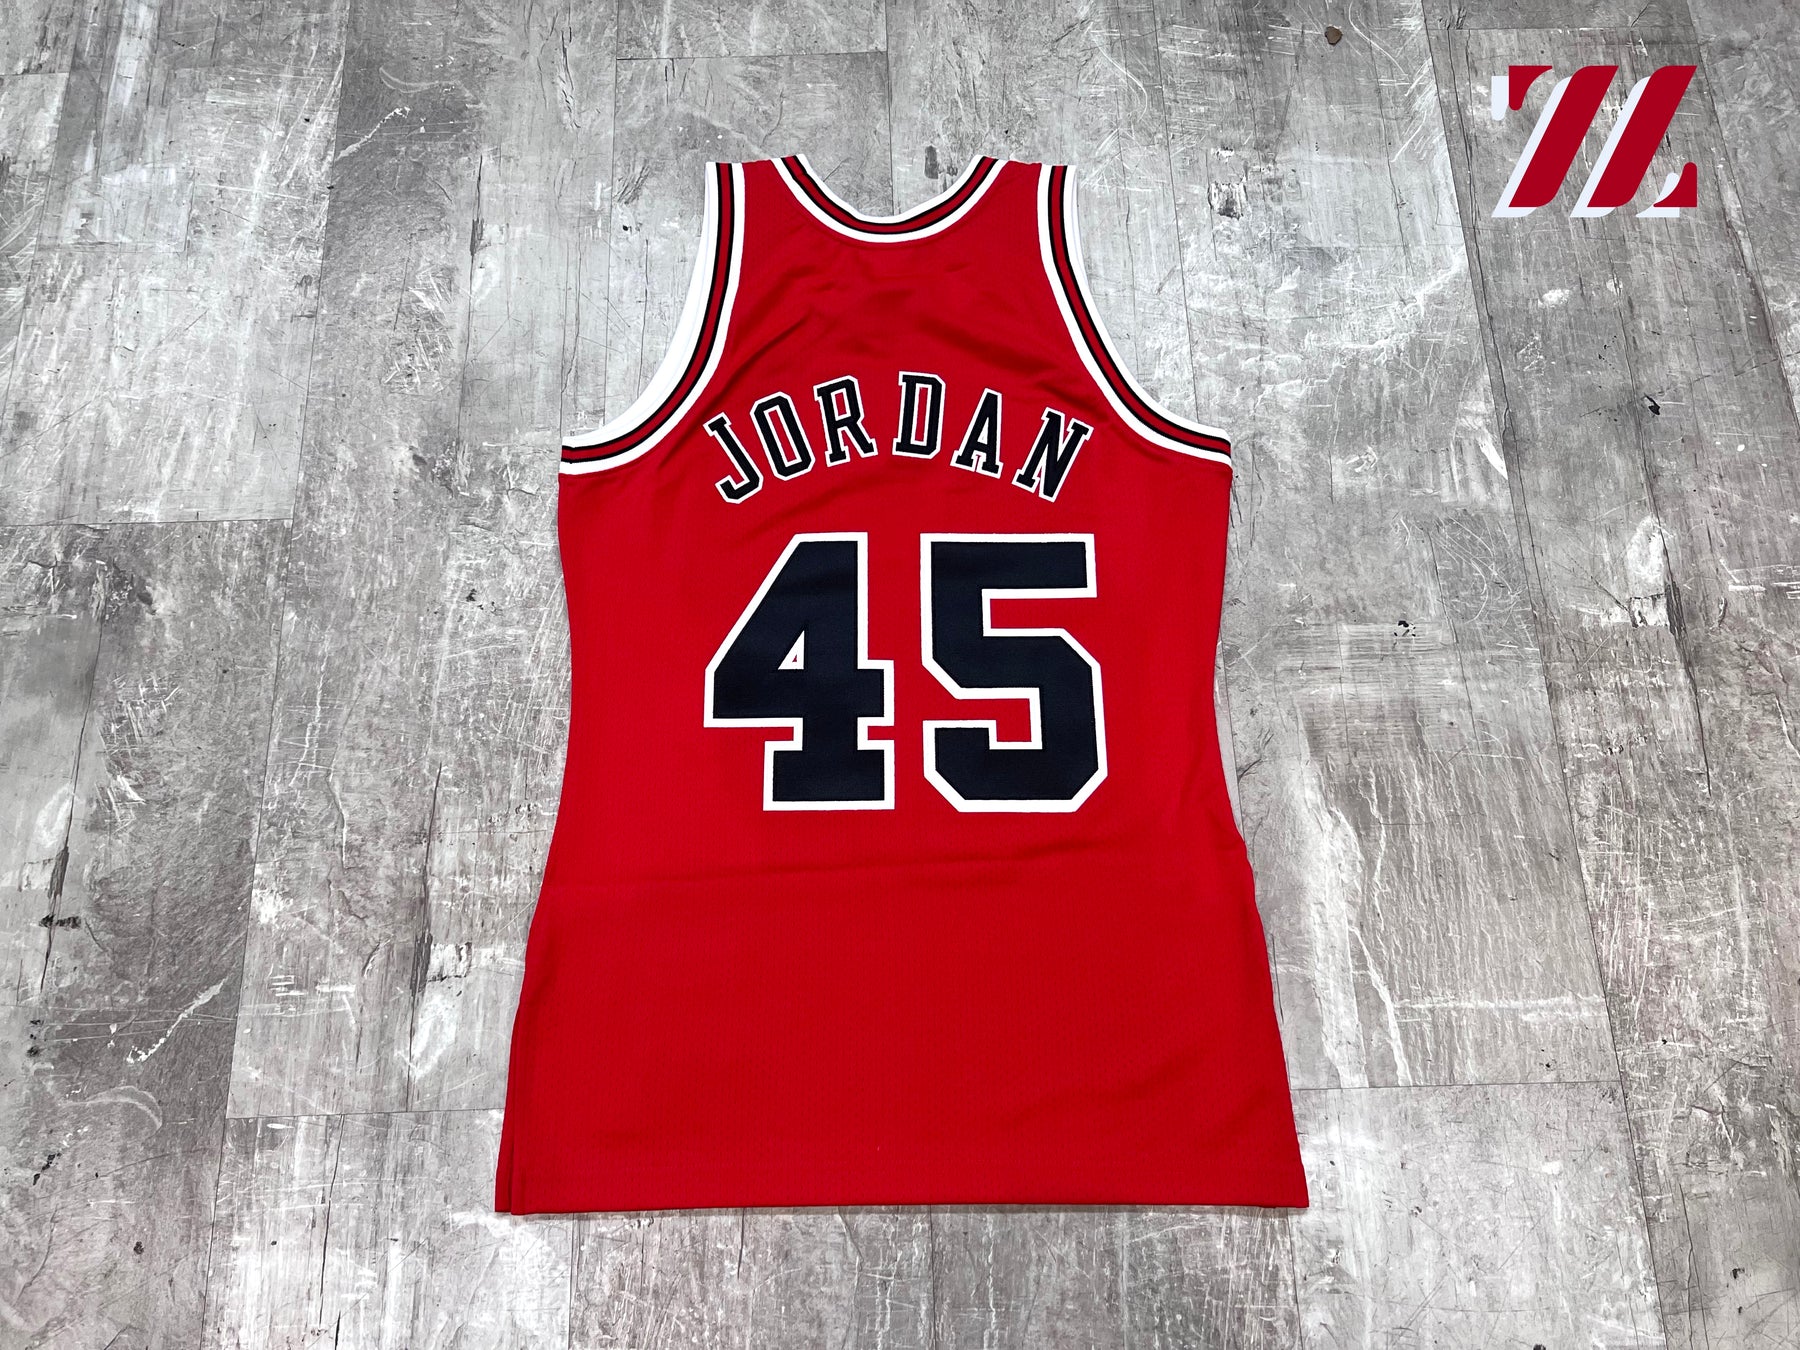 Mavin  Michael Jordan Mitchell & Ness Nostalgia 94-95 #45 Bulls Jersey  Size 52 XXL (3H)